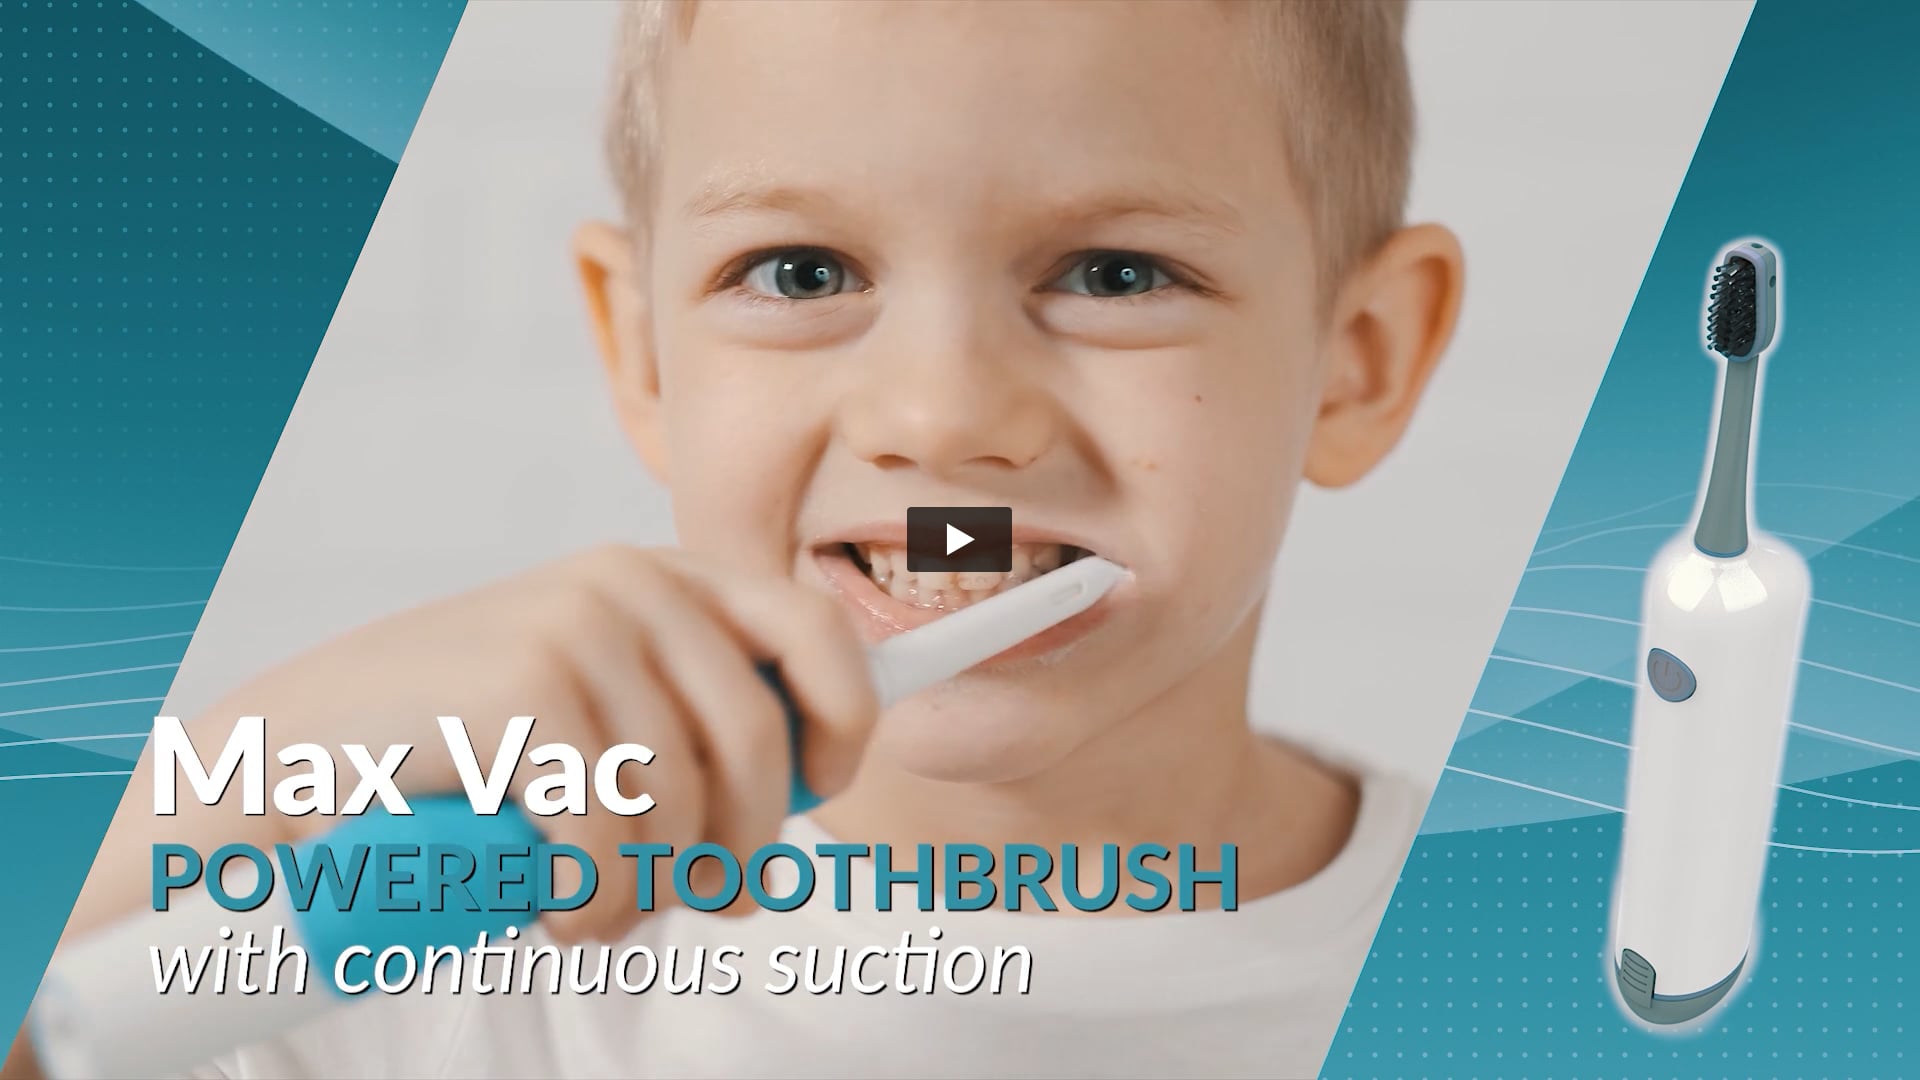 Max Vac Powered Toothbrush video